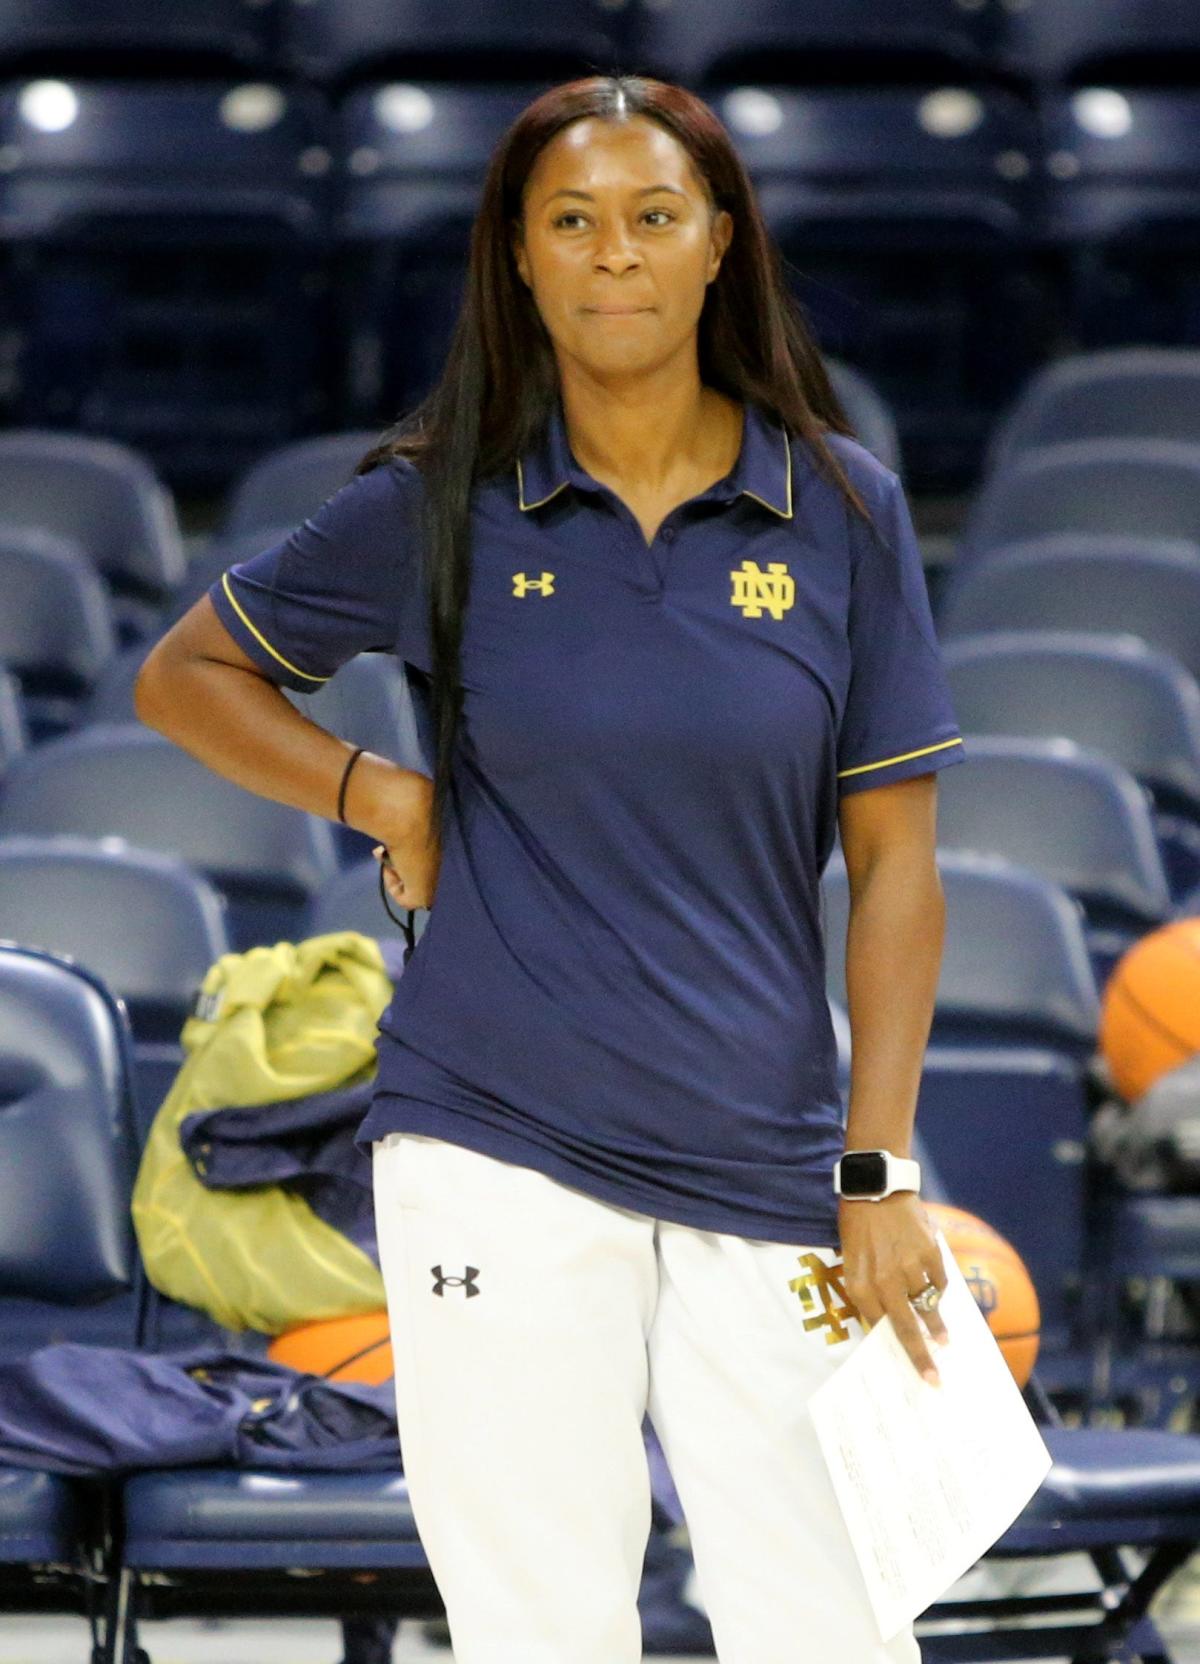 Notre Dame Guard Dara Mabrey Announces Season-Ending Knee Injury